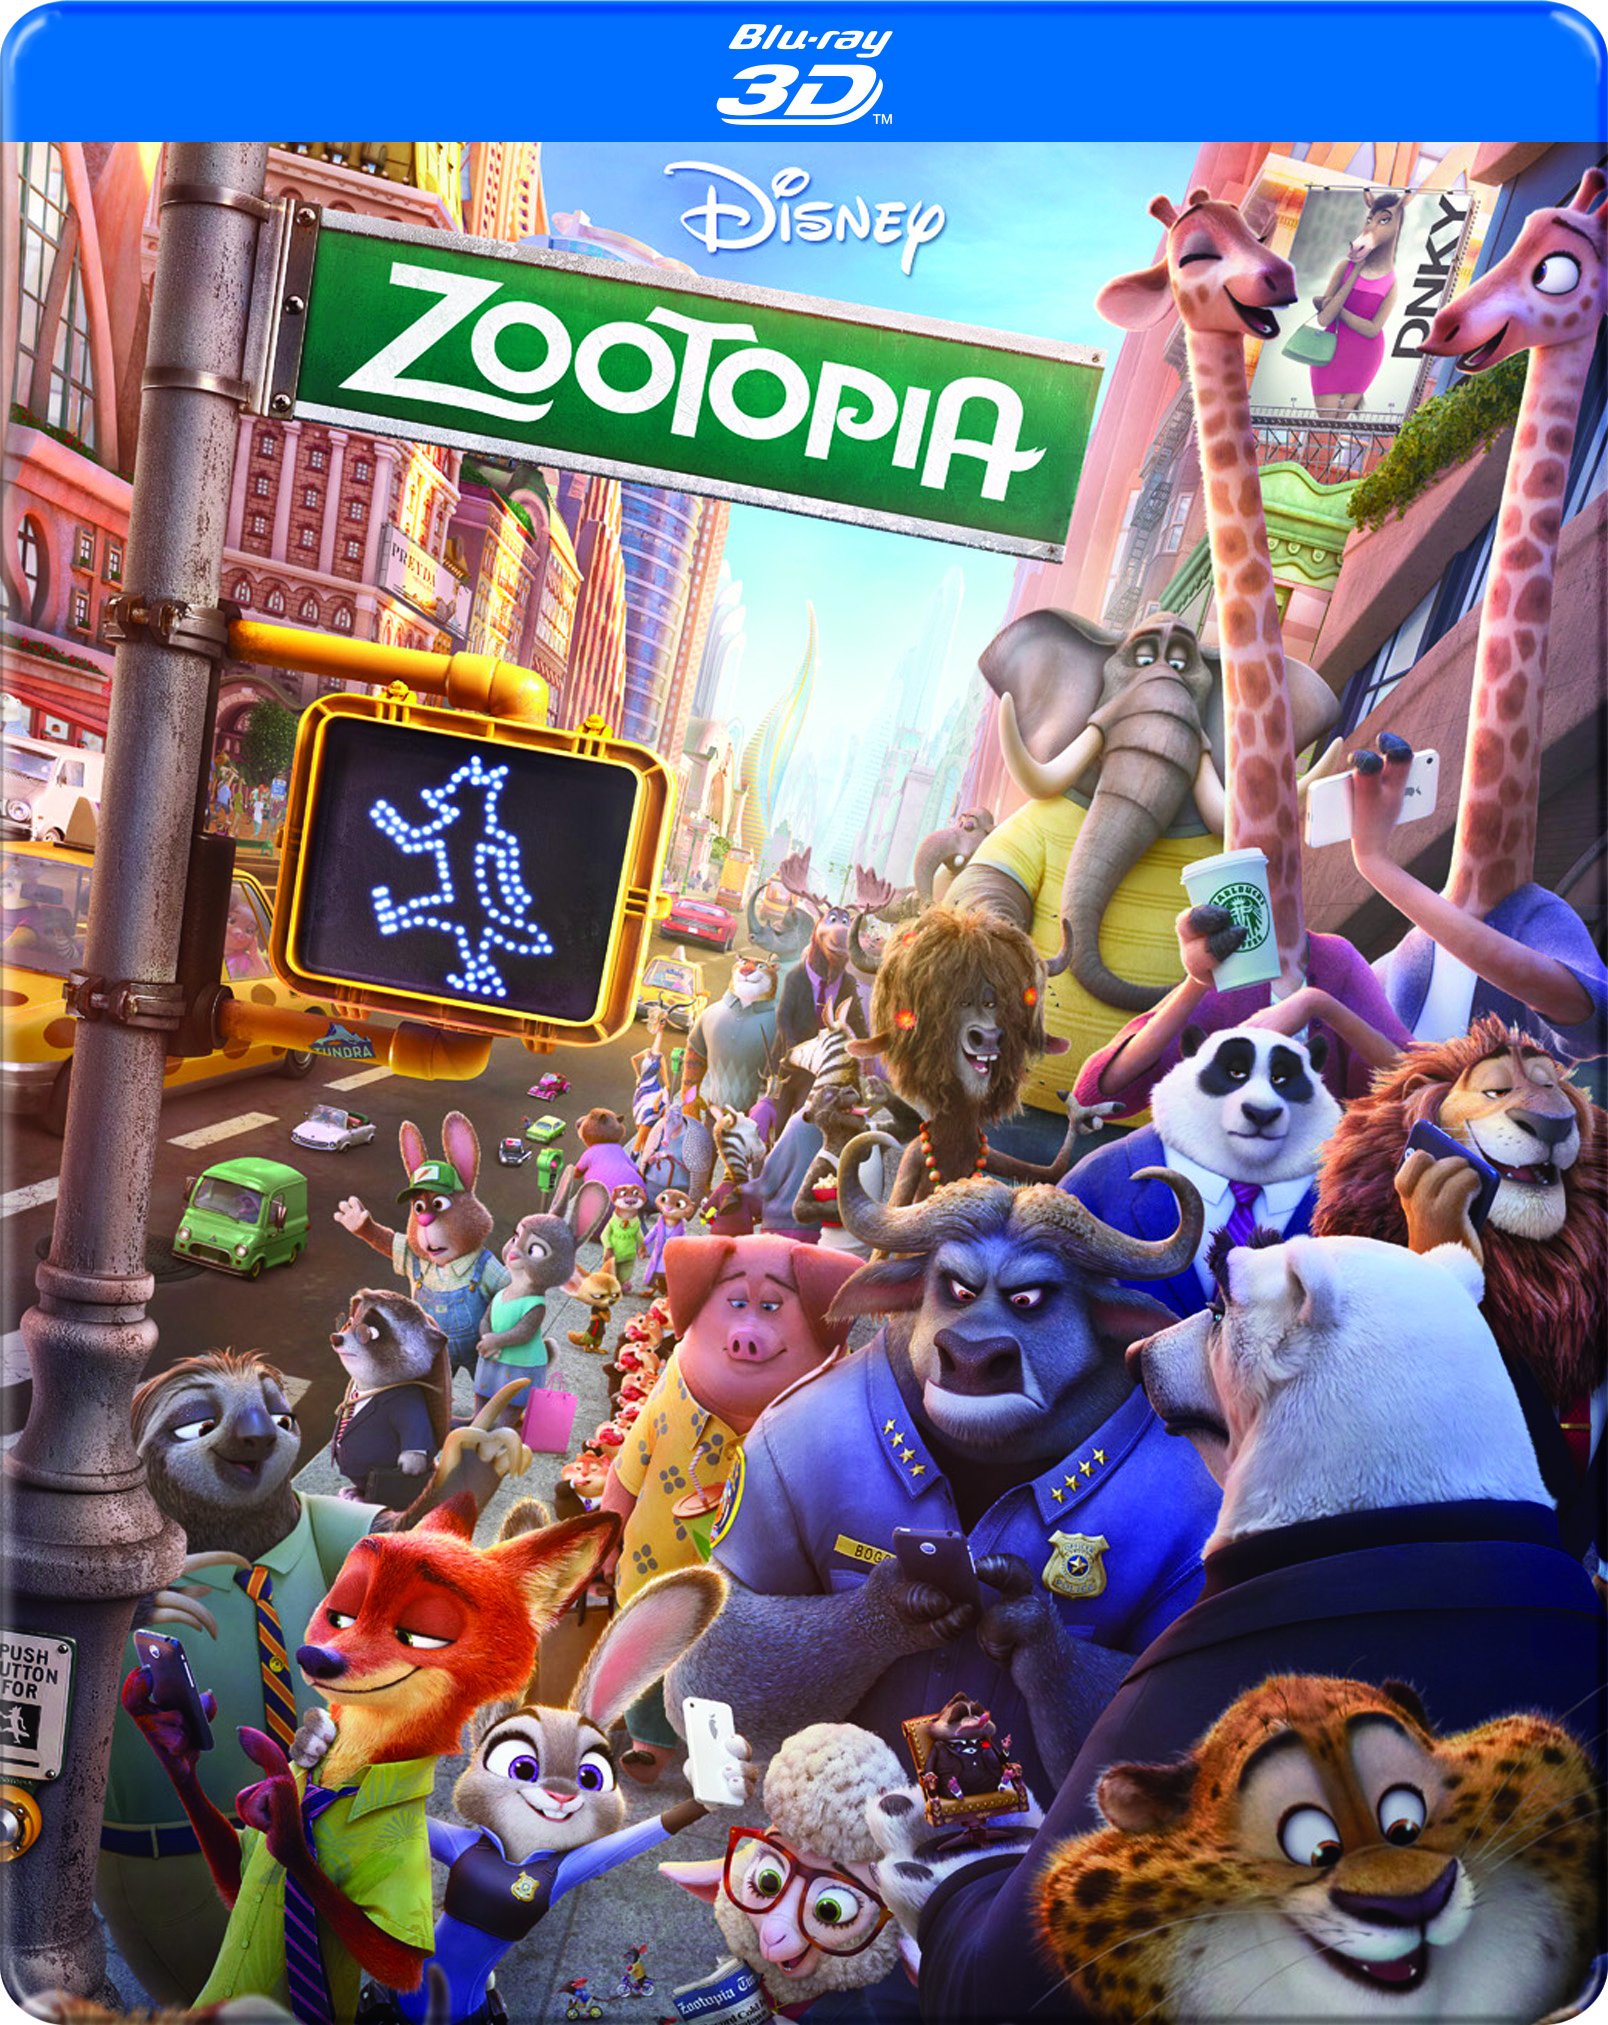 zootopia-steelbook-movie-purchase-or-watch-online